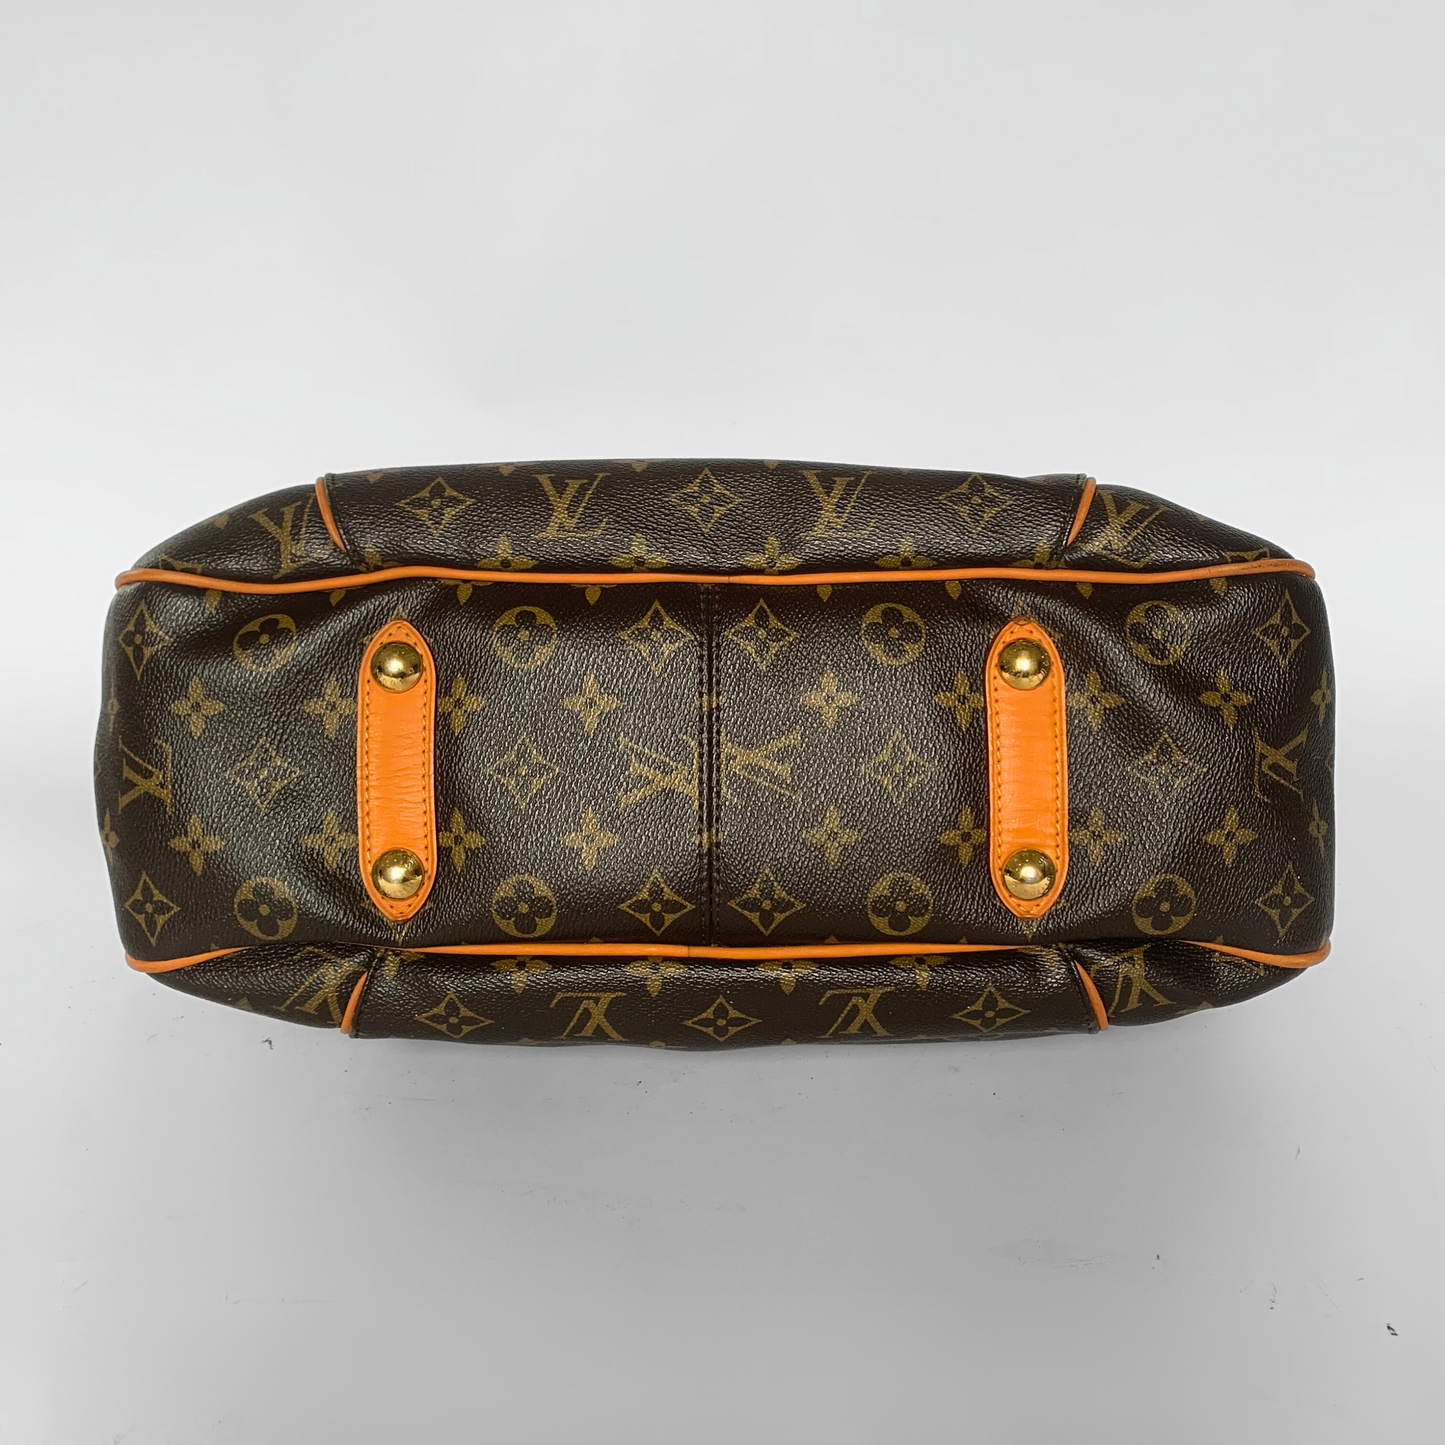 Louis Vuitton Louis Vuitton Galliera Tote Monogram Canvas - Handtasche - Etoile Luxury Vintage